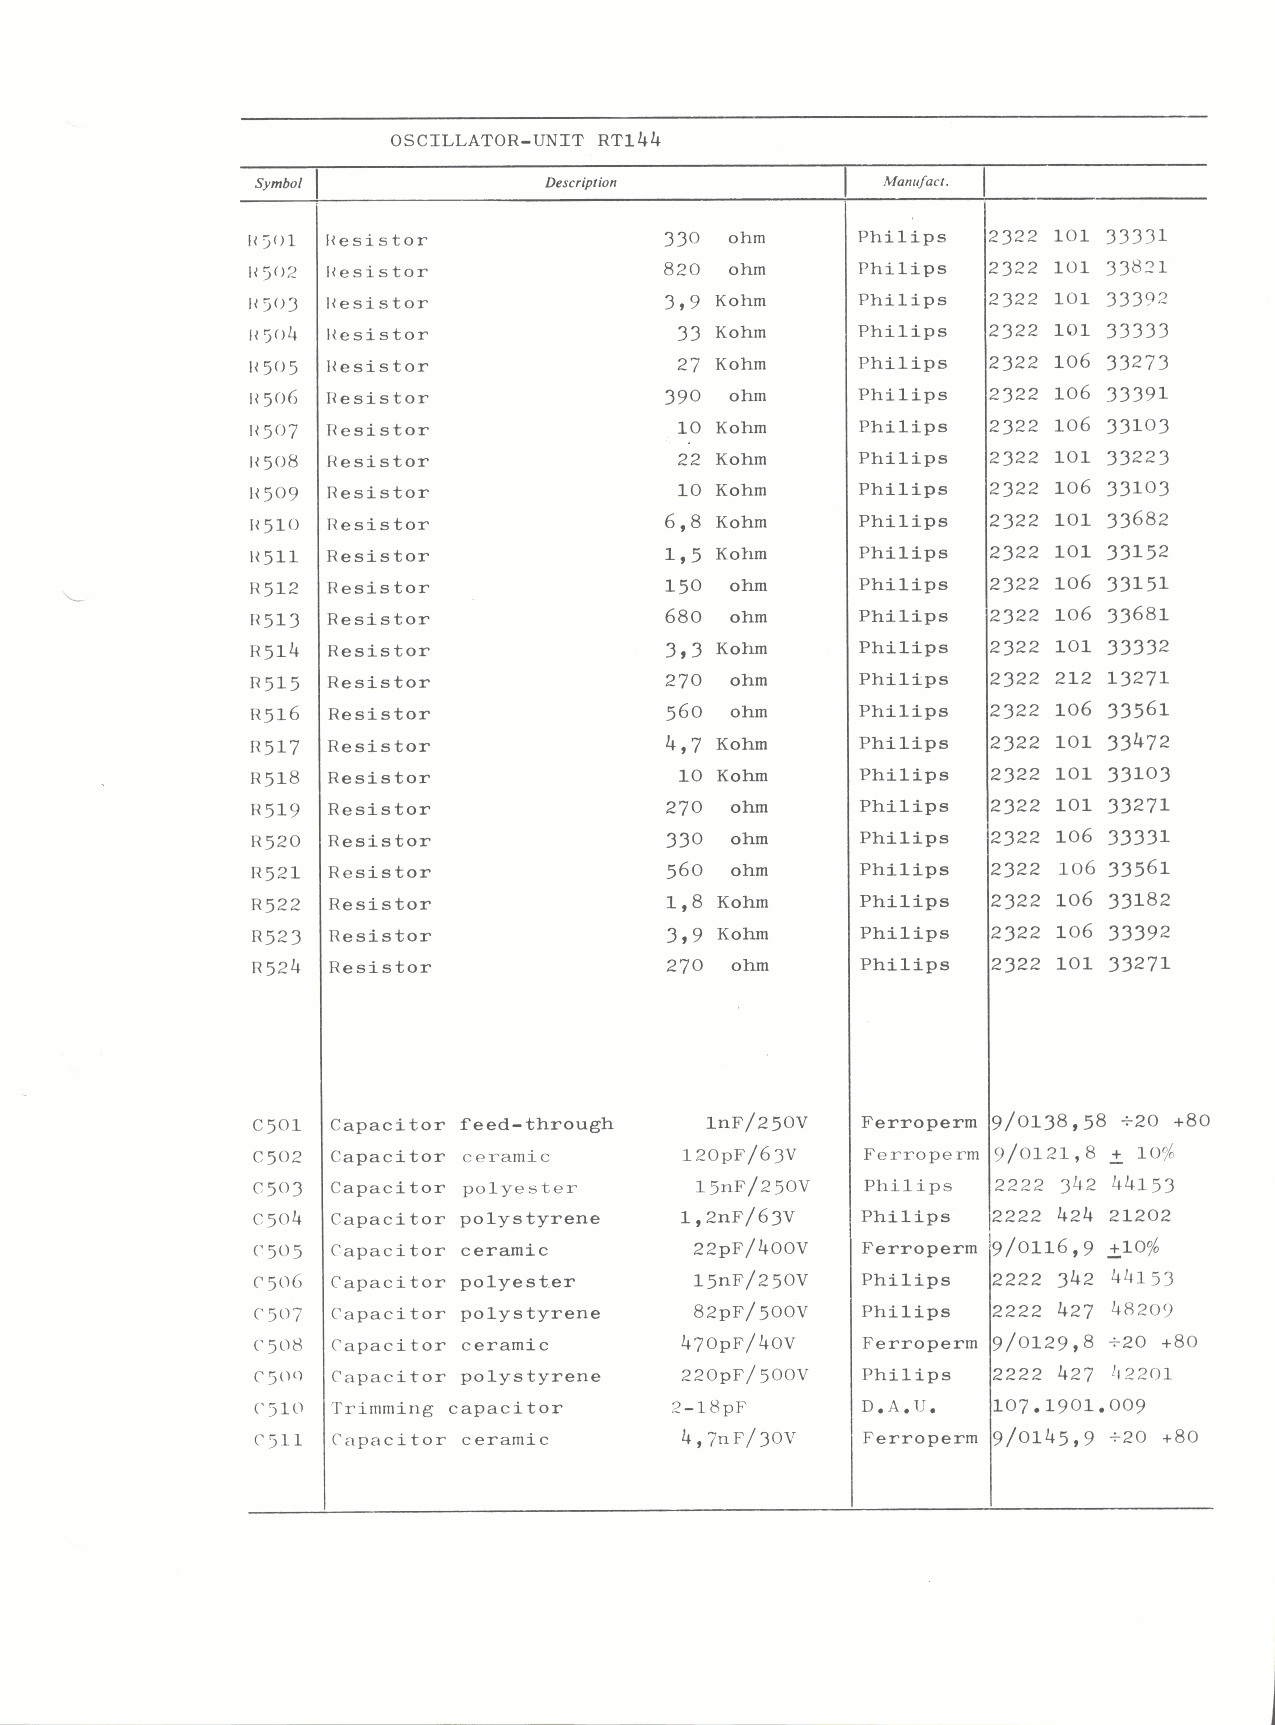 Oscillator unit part list